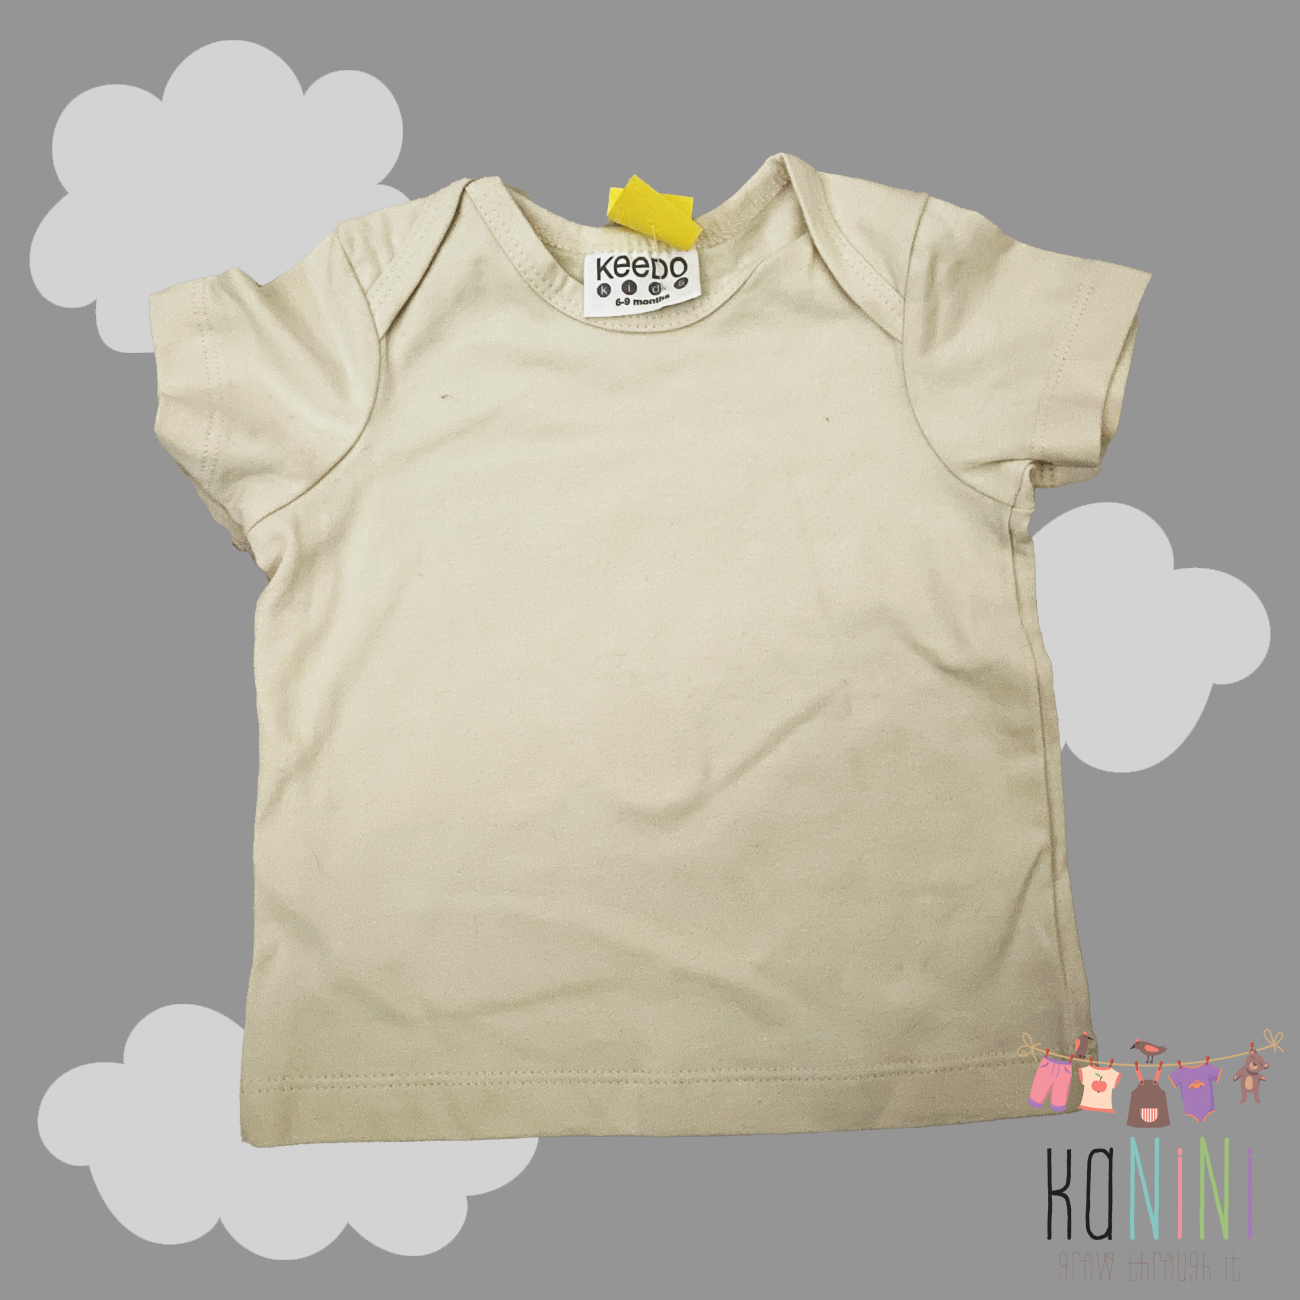 Featured image for “Keedo 6 - 12 Months Unisex Cream T-Shirt”